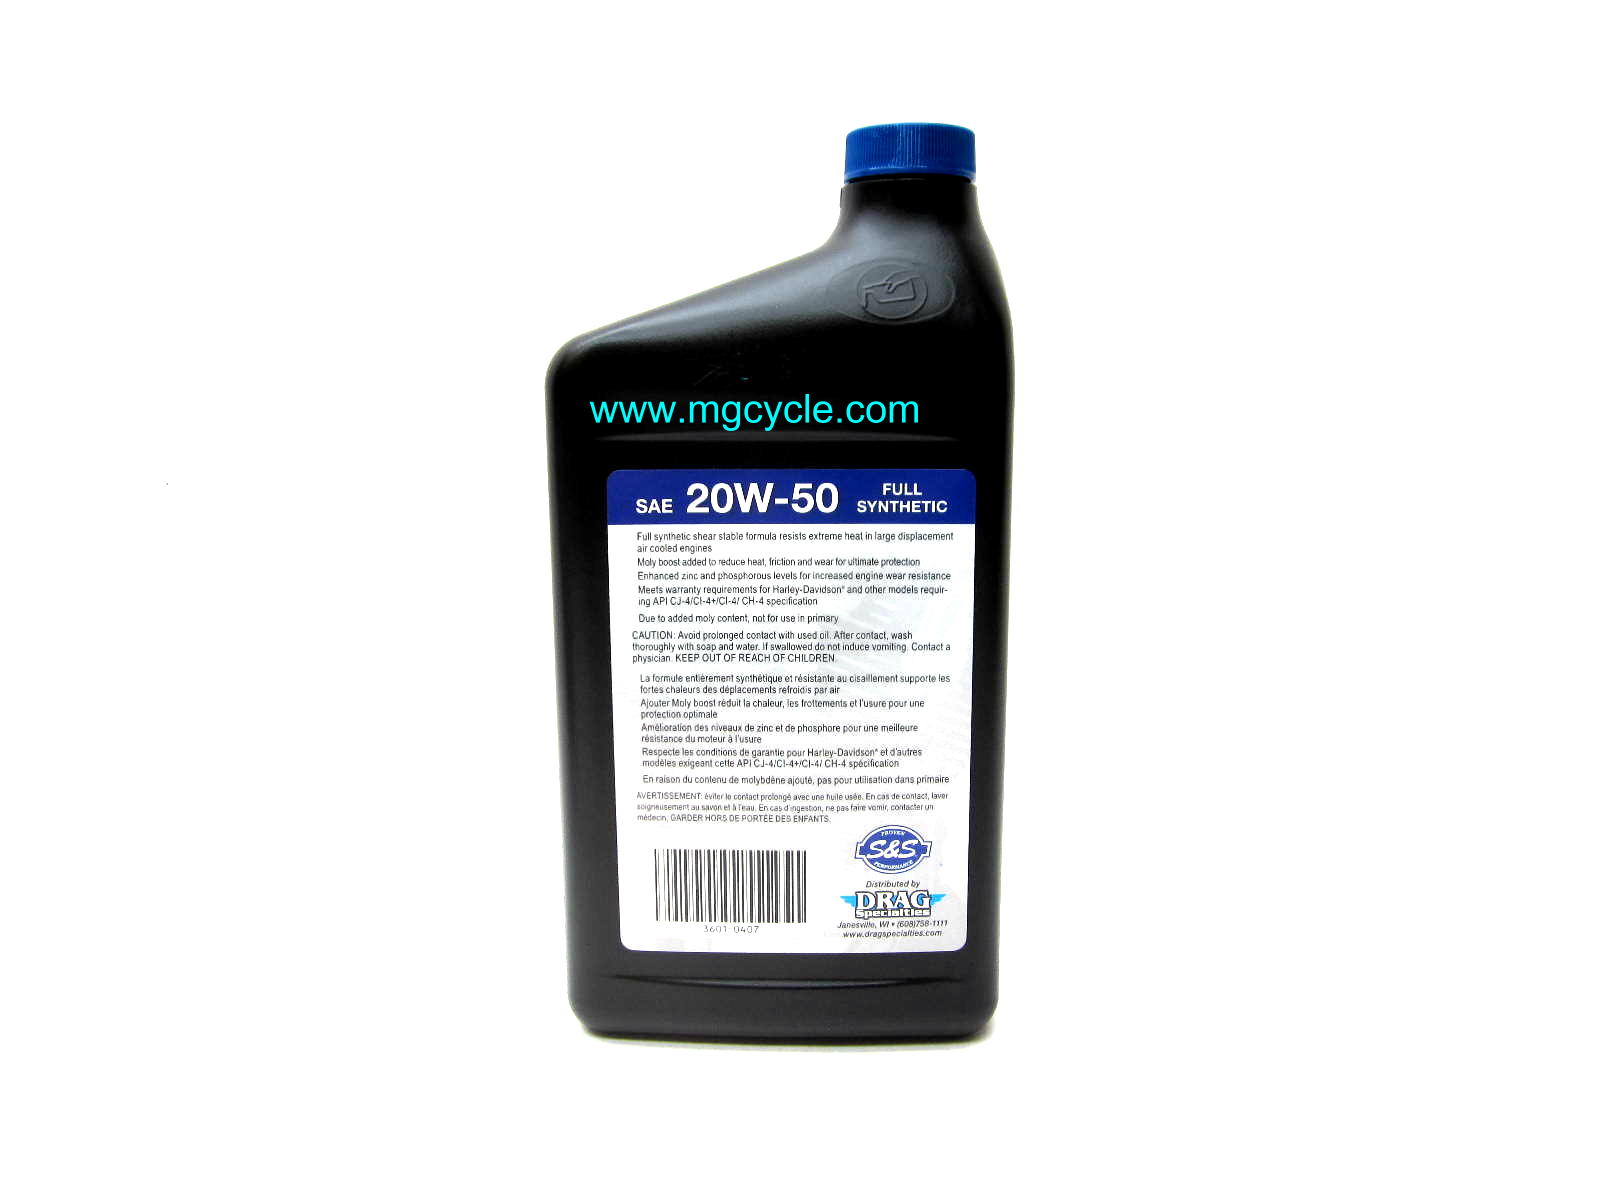 1 quart S&S 20W-50 full synthetic engine oil